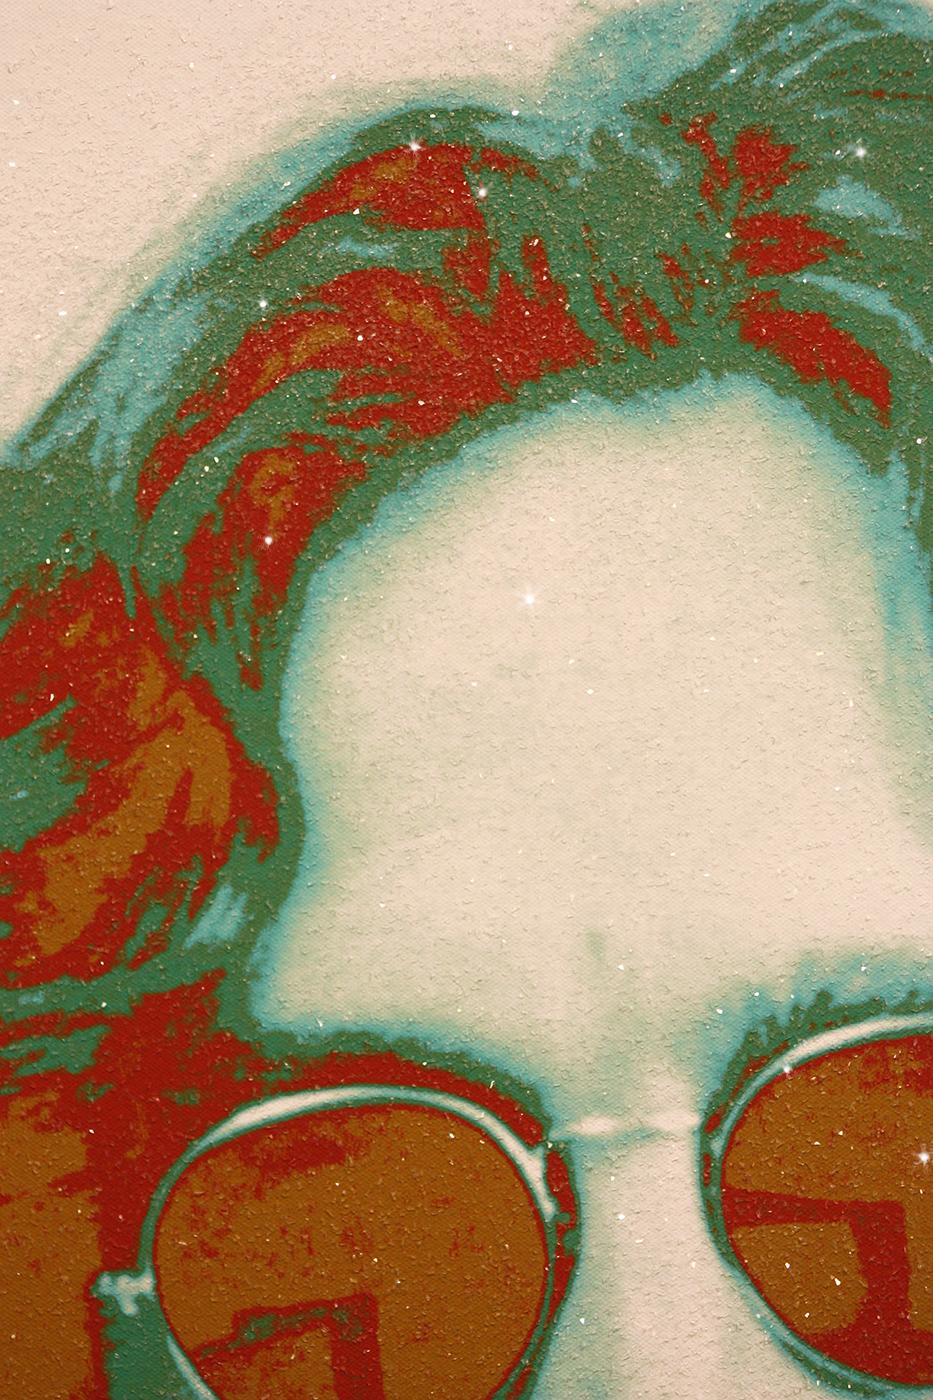 Toile Diamond Dust de John Lennon, 38 x 60 The Lost Weekend - Contemporain Mixed Media Art par May Pang and Ceravolo 